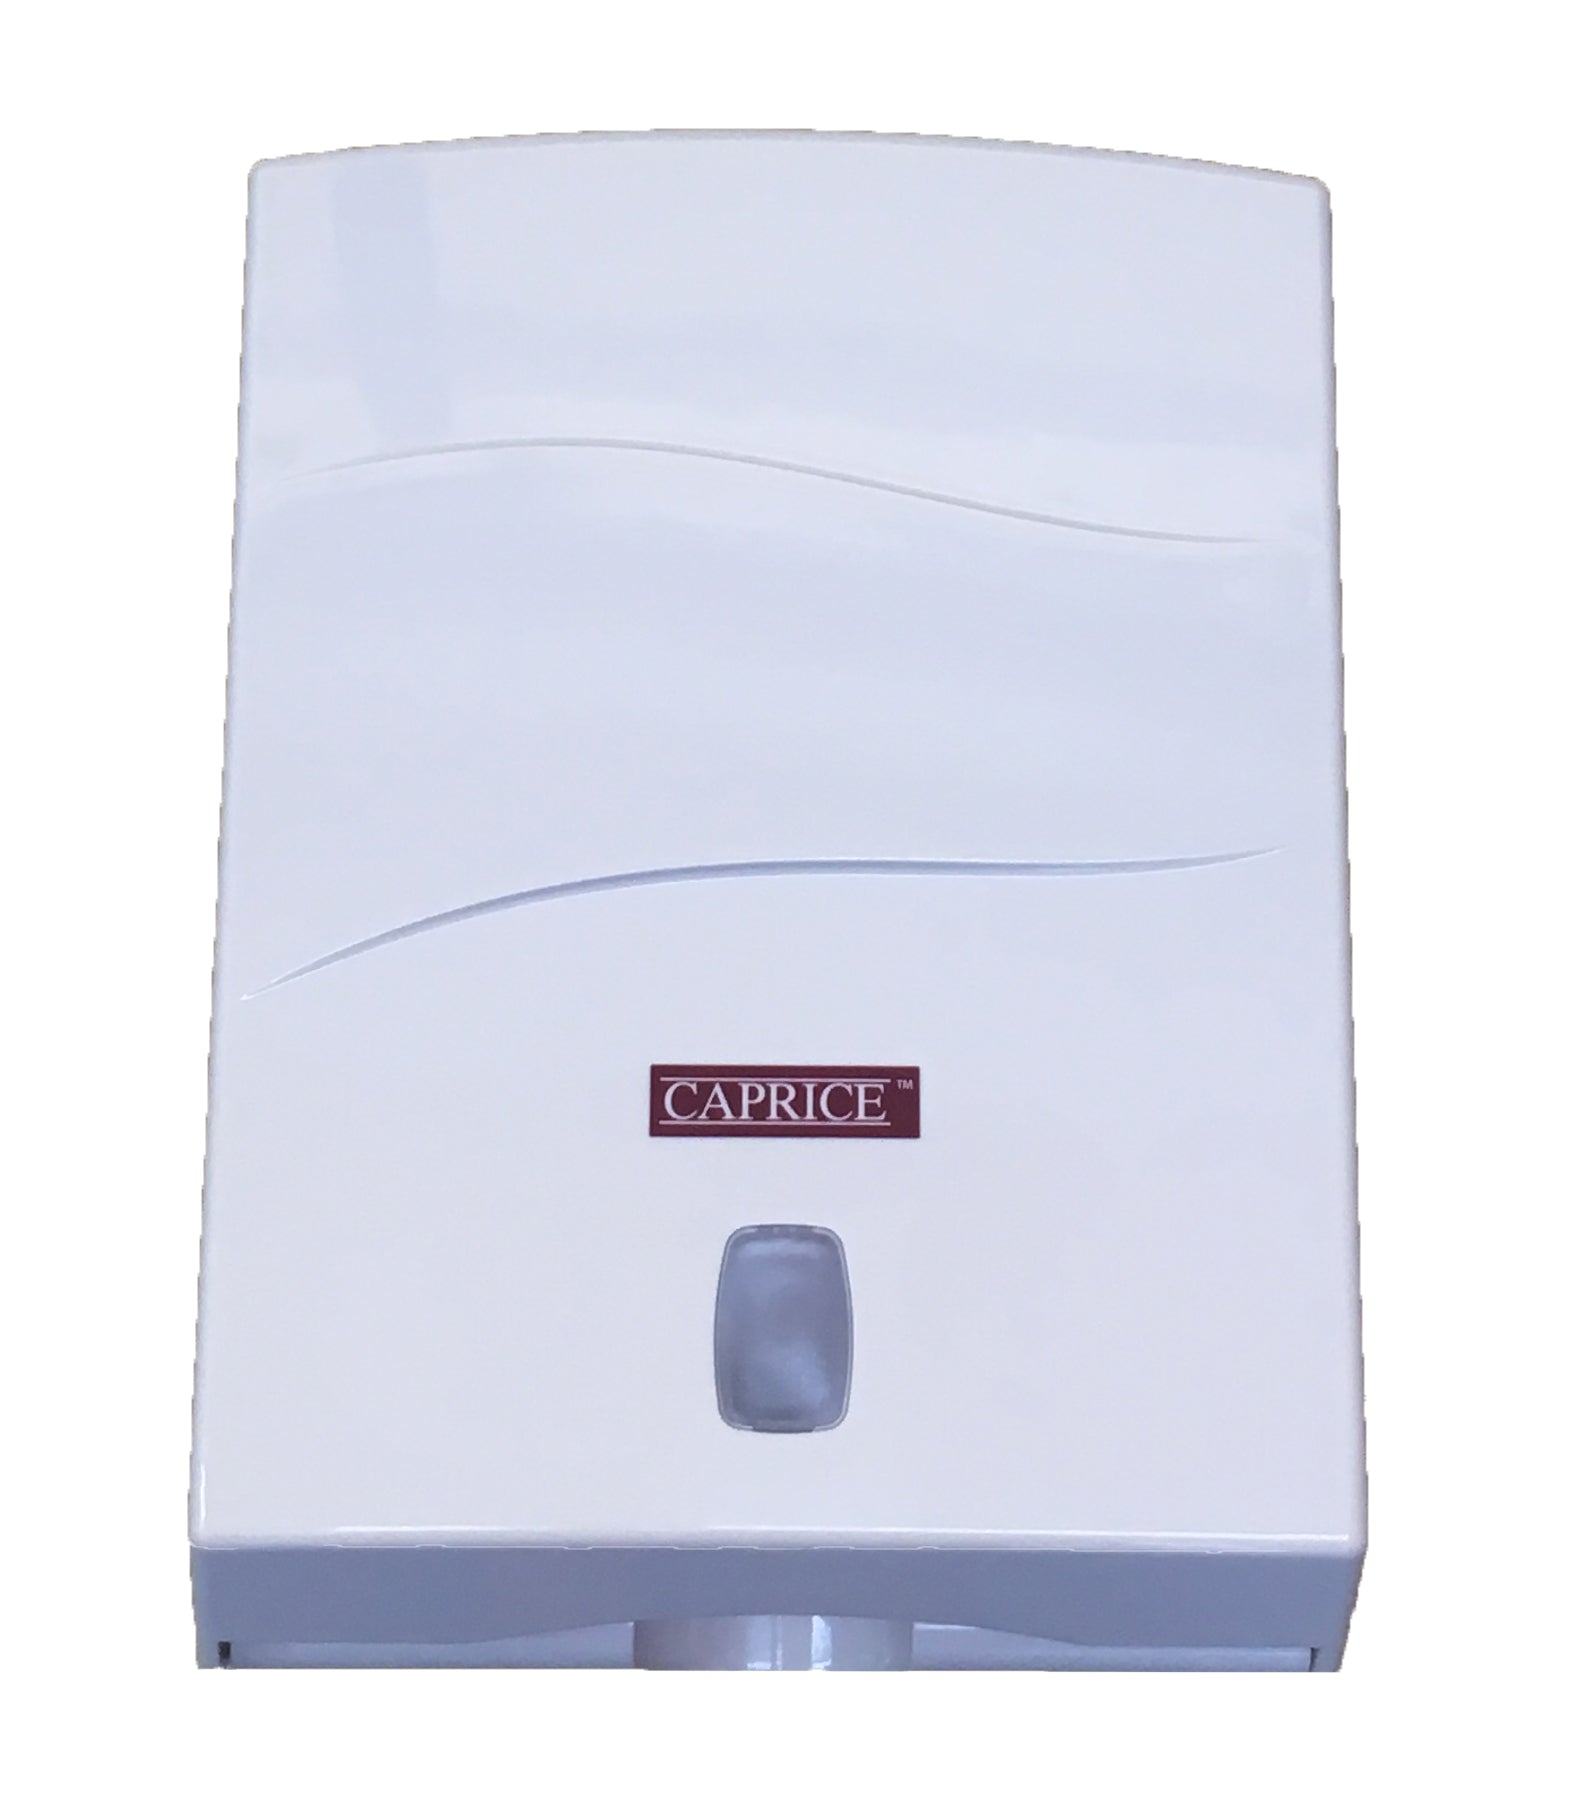 Caprice Interleaved Towel Dispenser